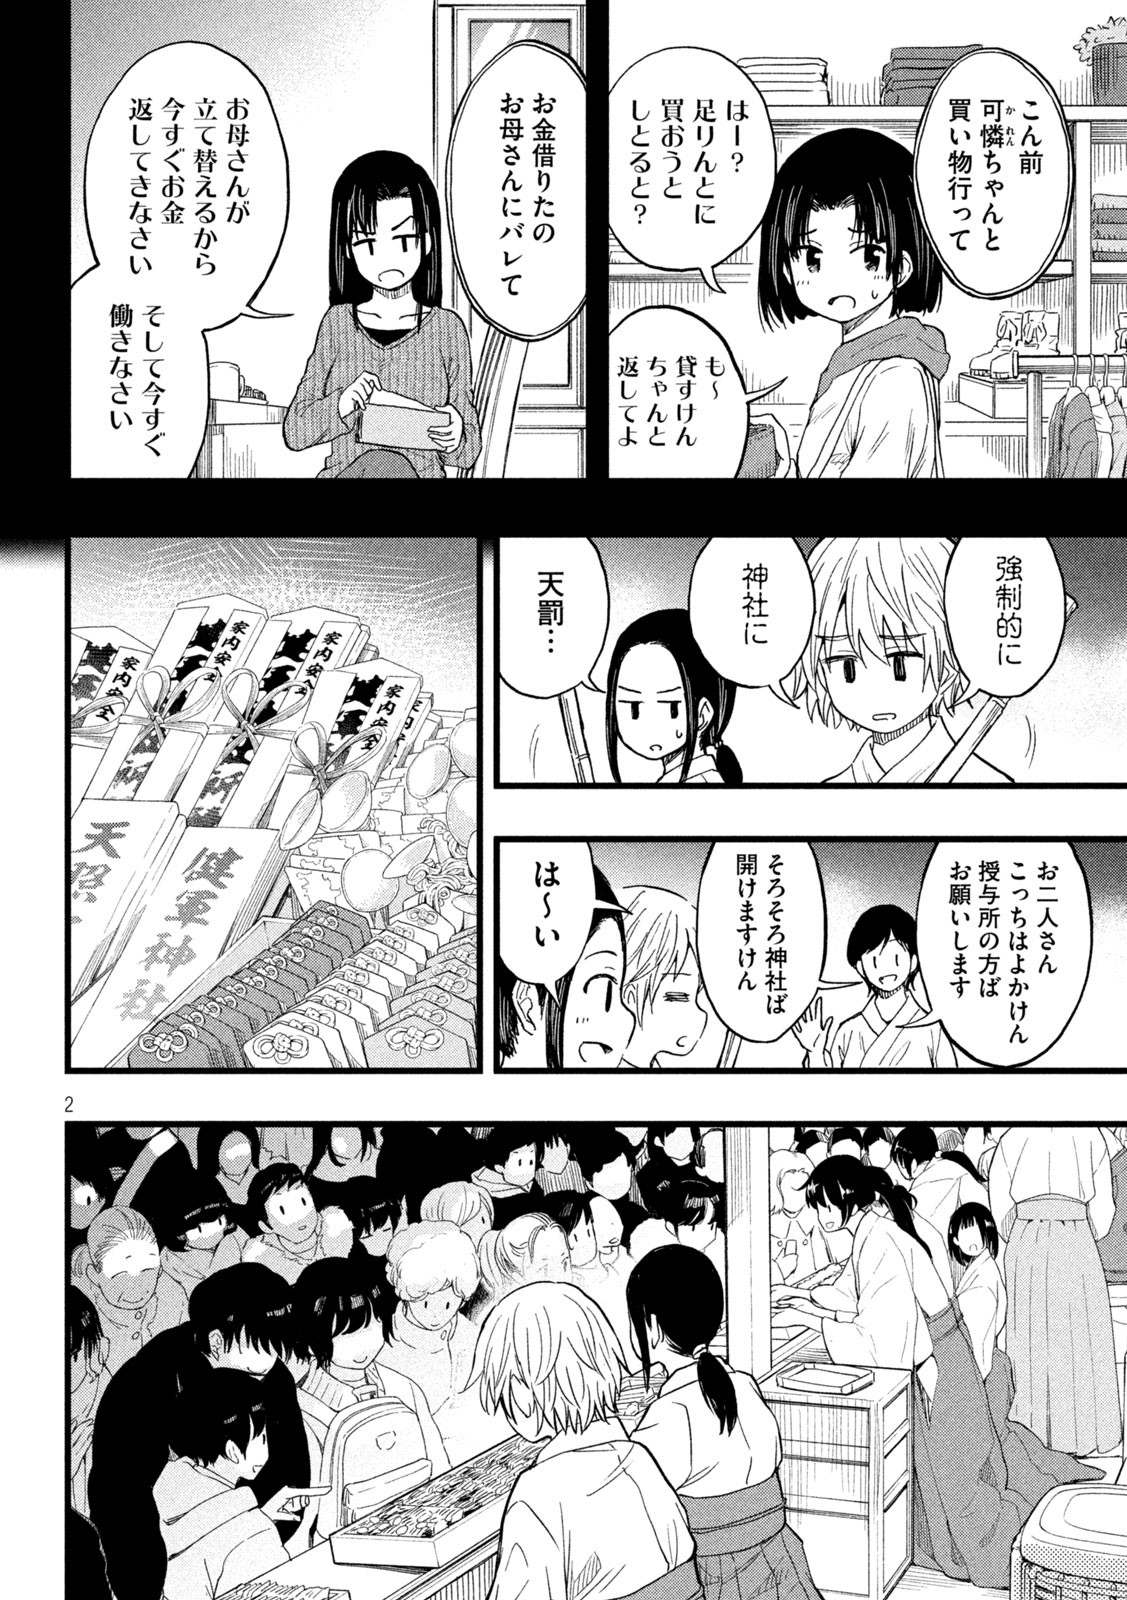 Koharu haru! - Chapter 77 - Page 2